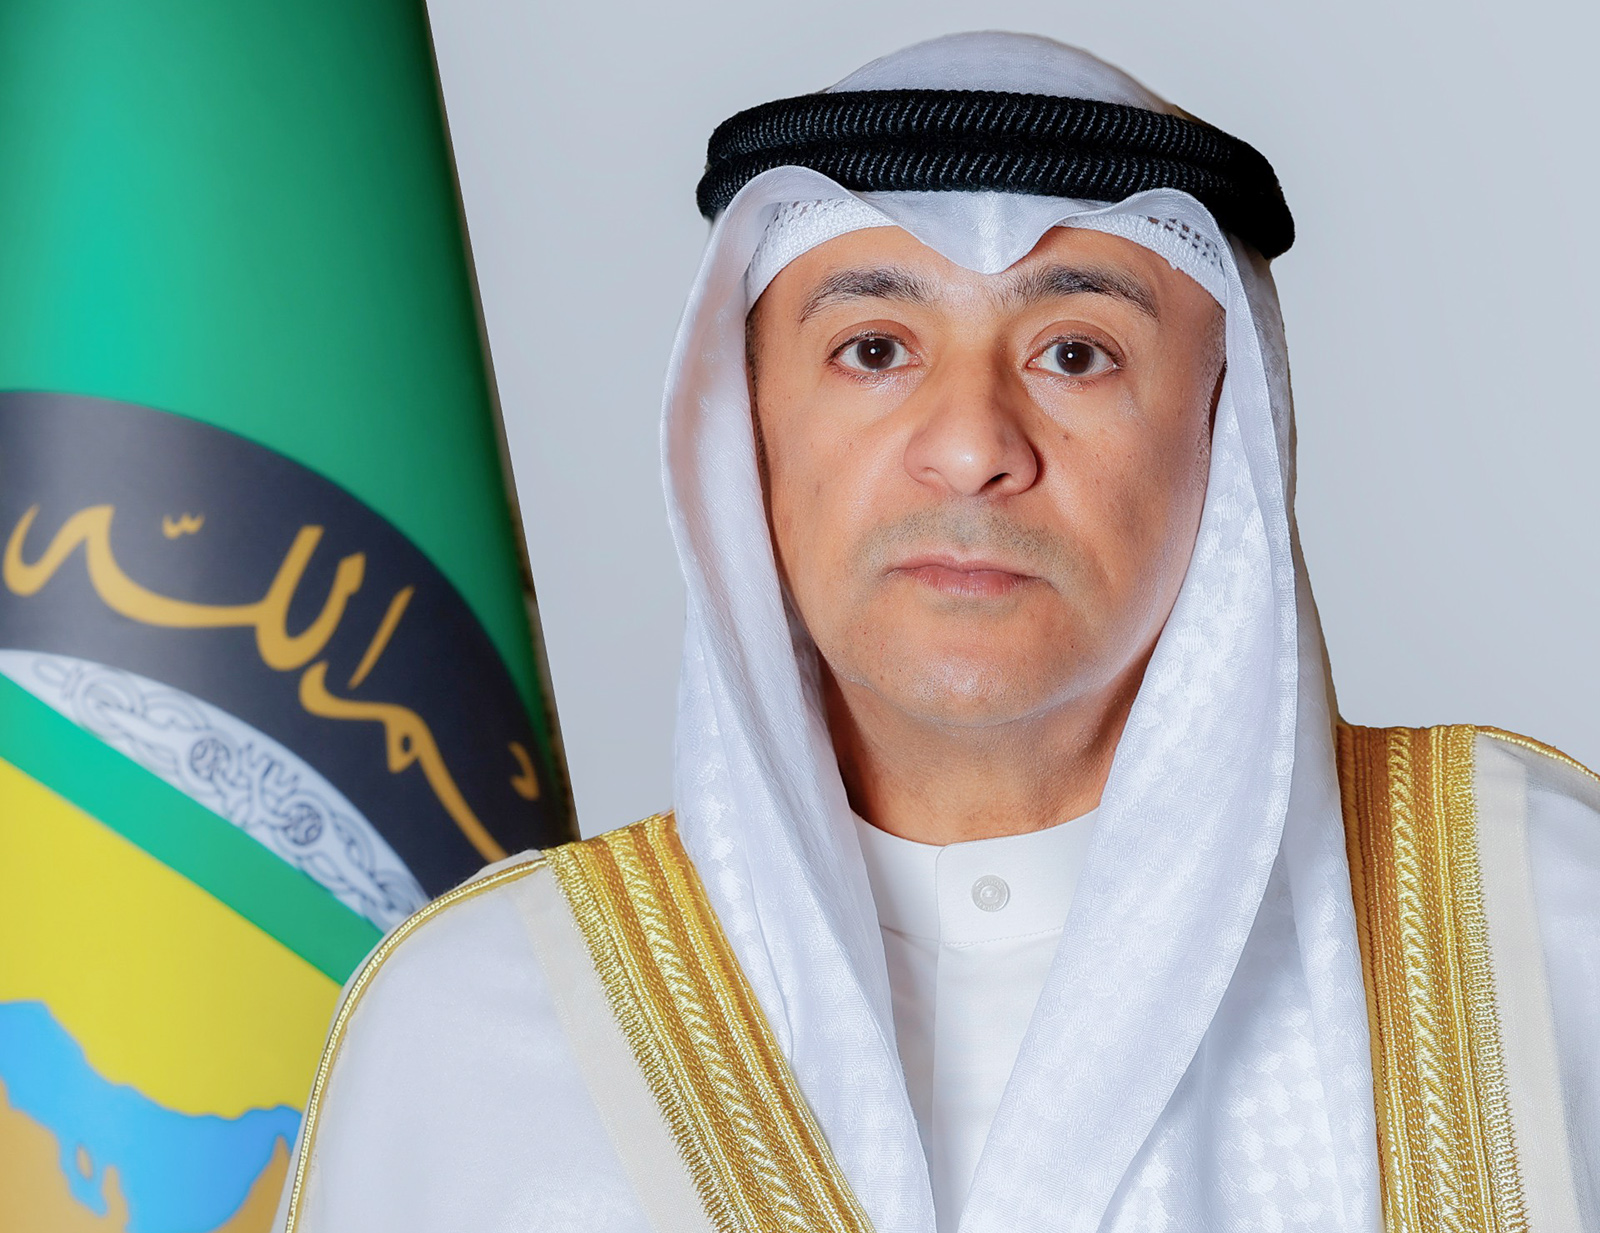 The GCC's Secretary General Jassem Al-Budaiwi